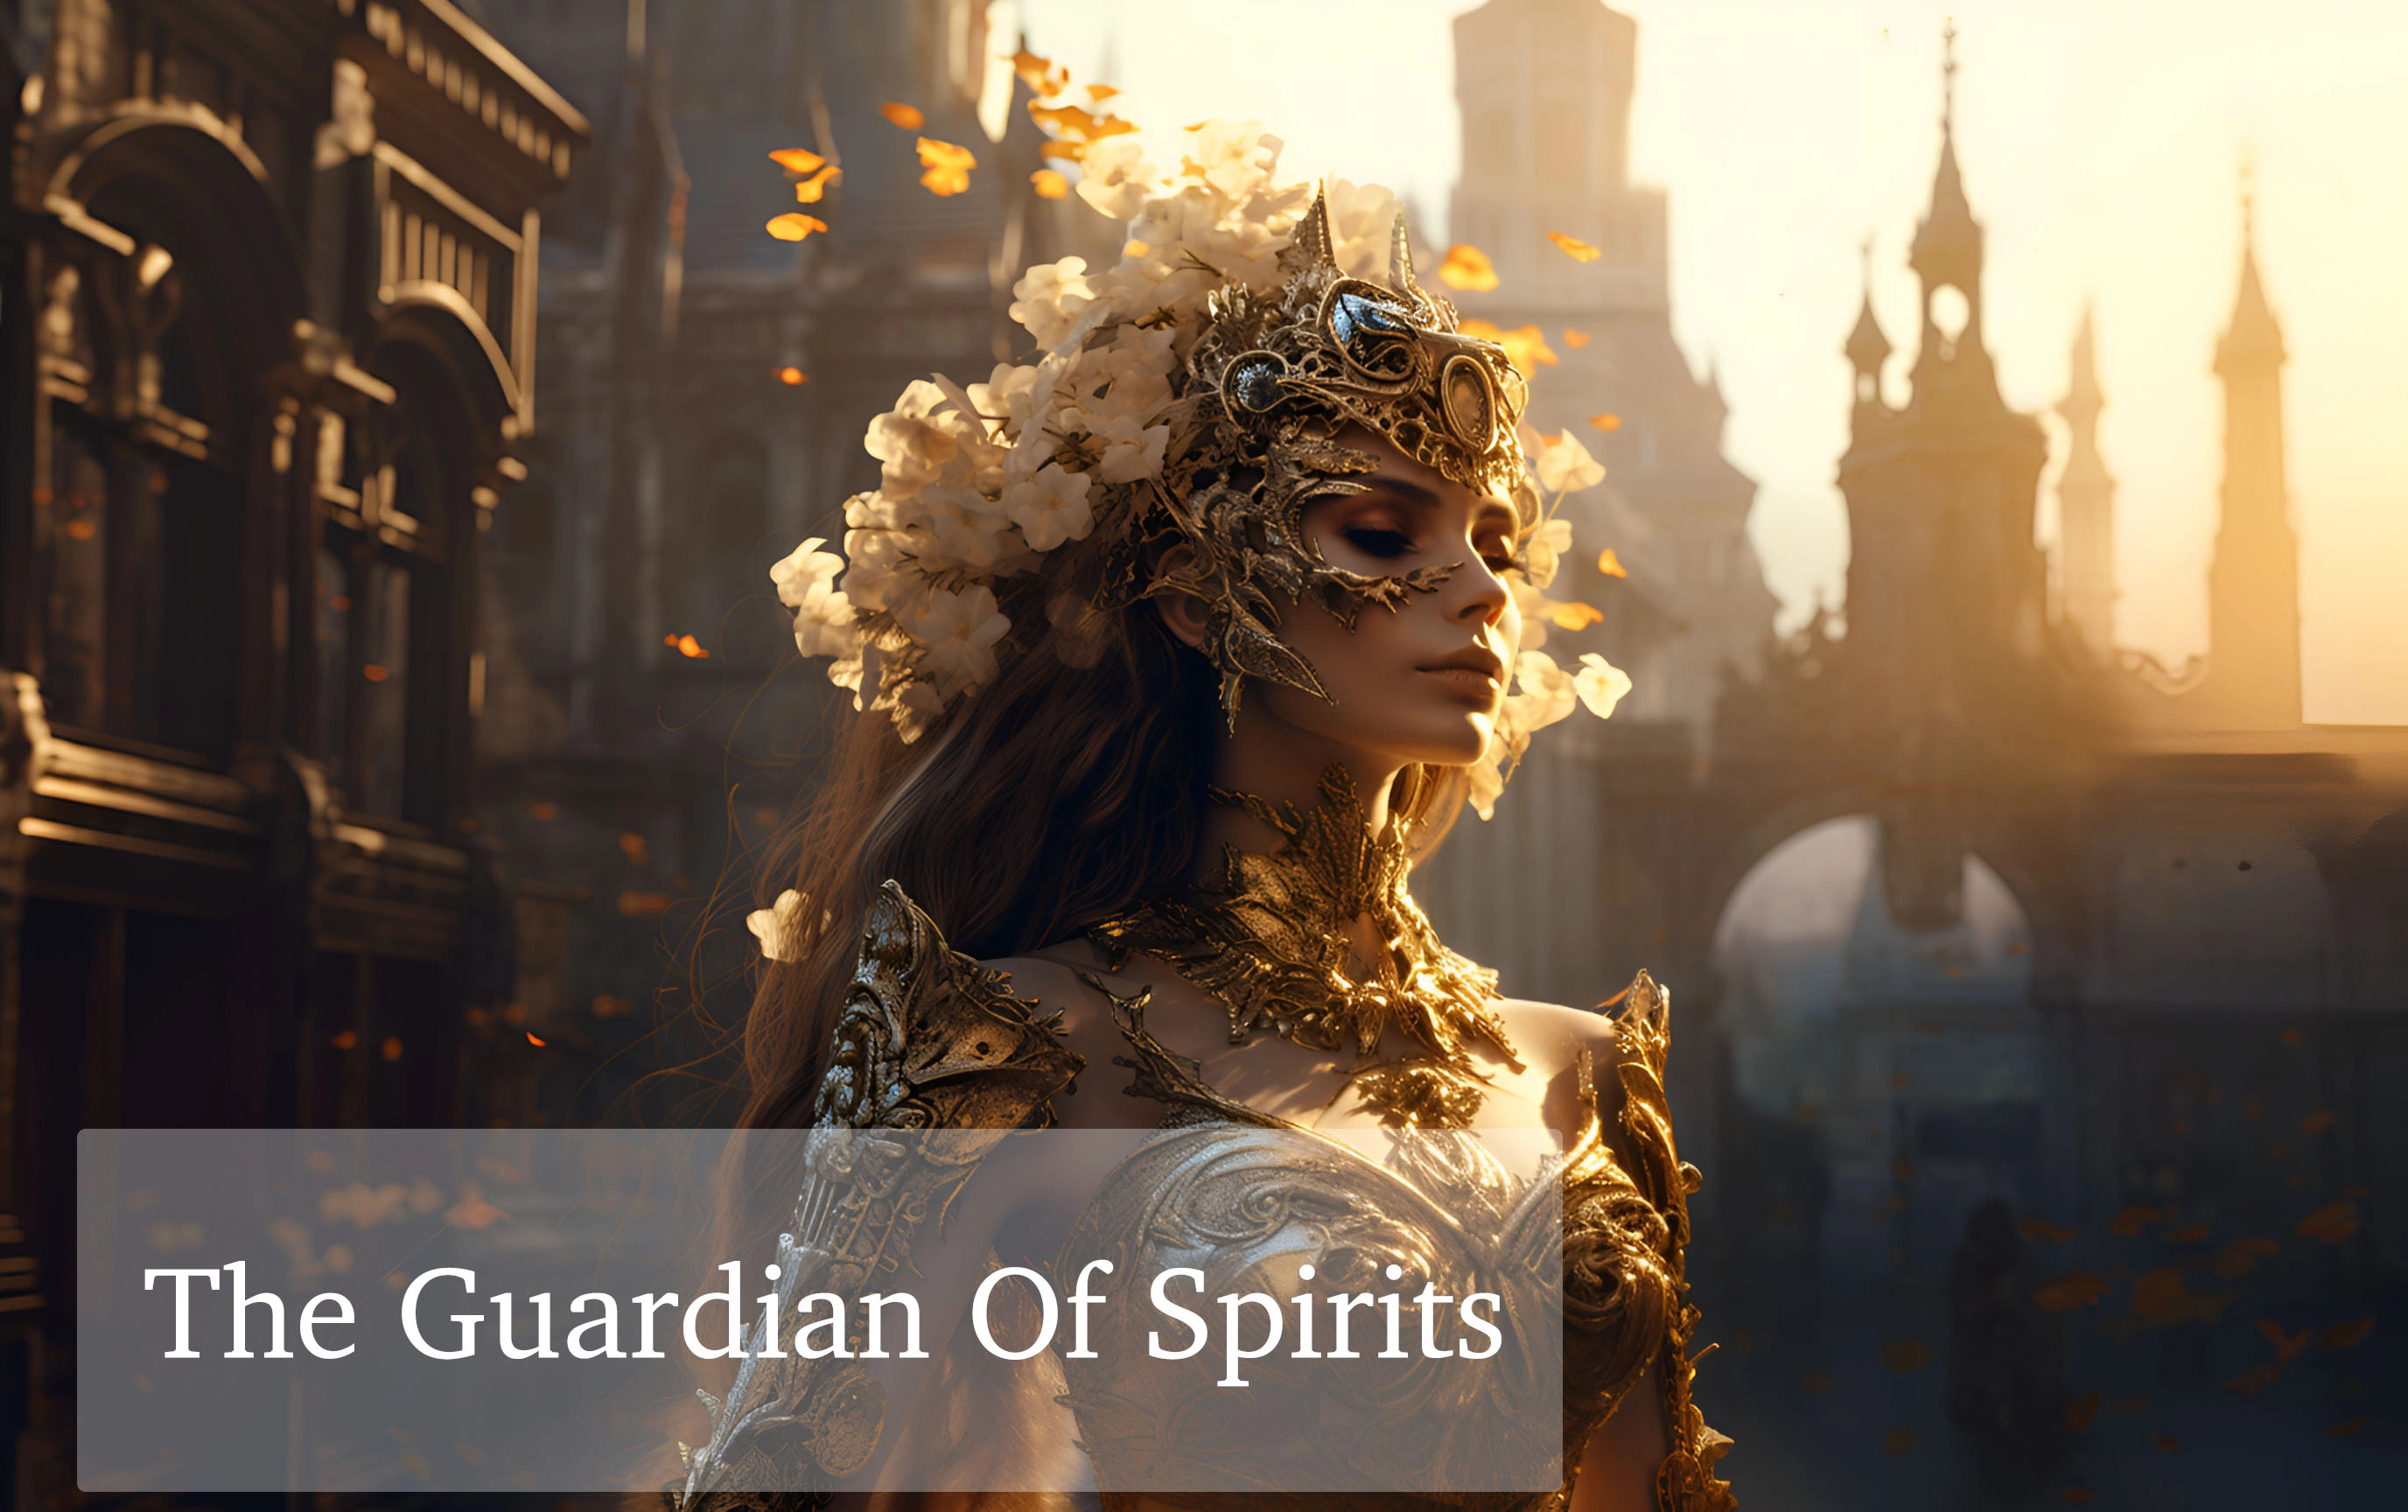 946-14-the-guardian-of-spirits-002-copia-17056097293173.jpg